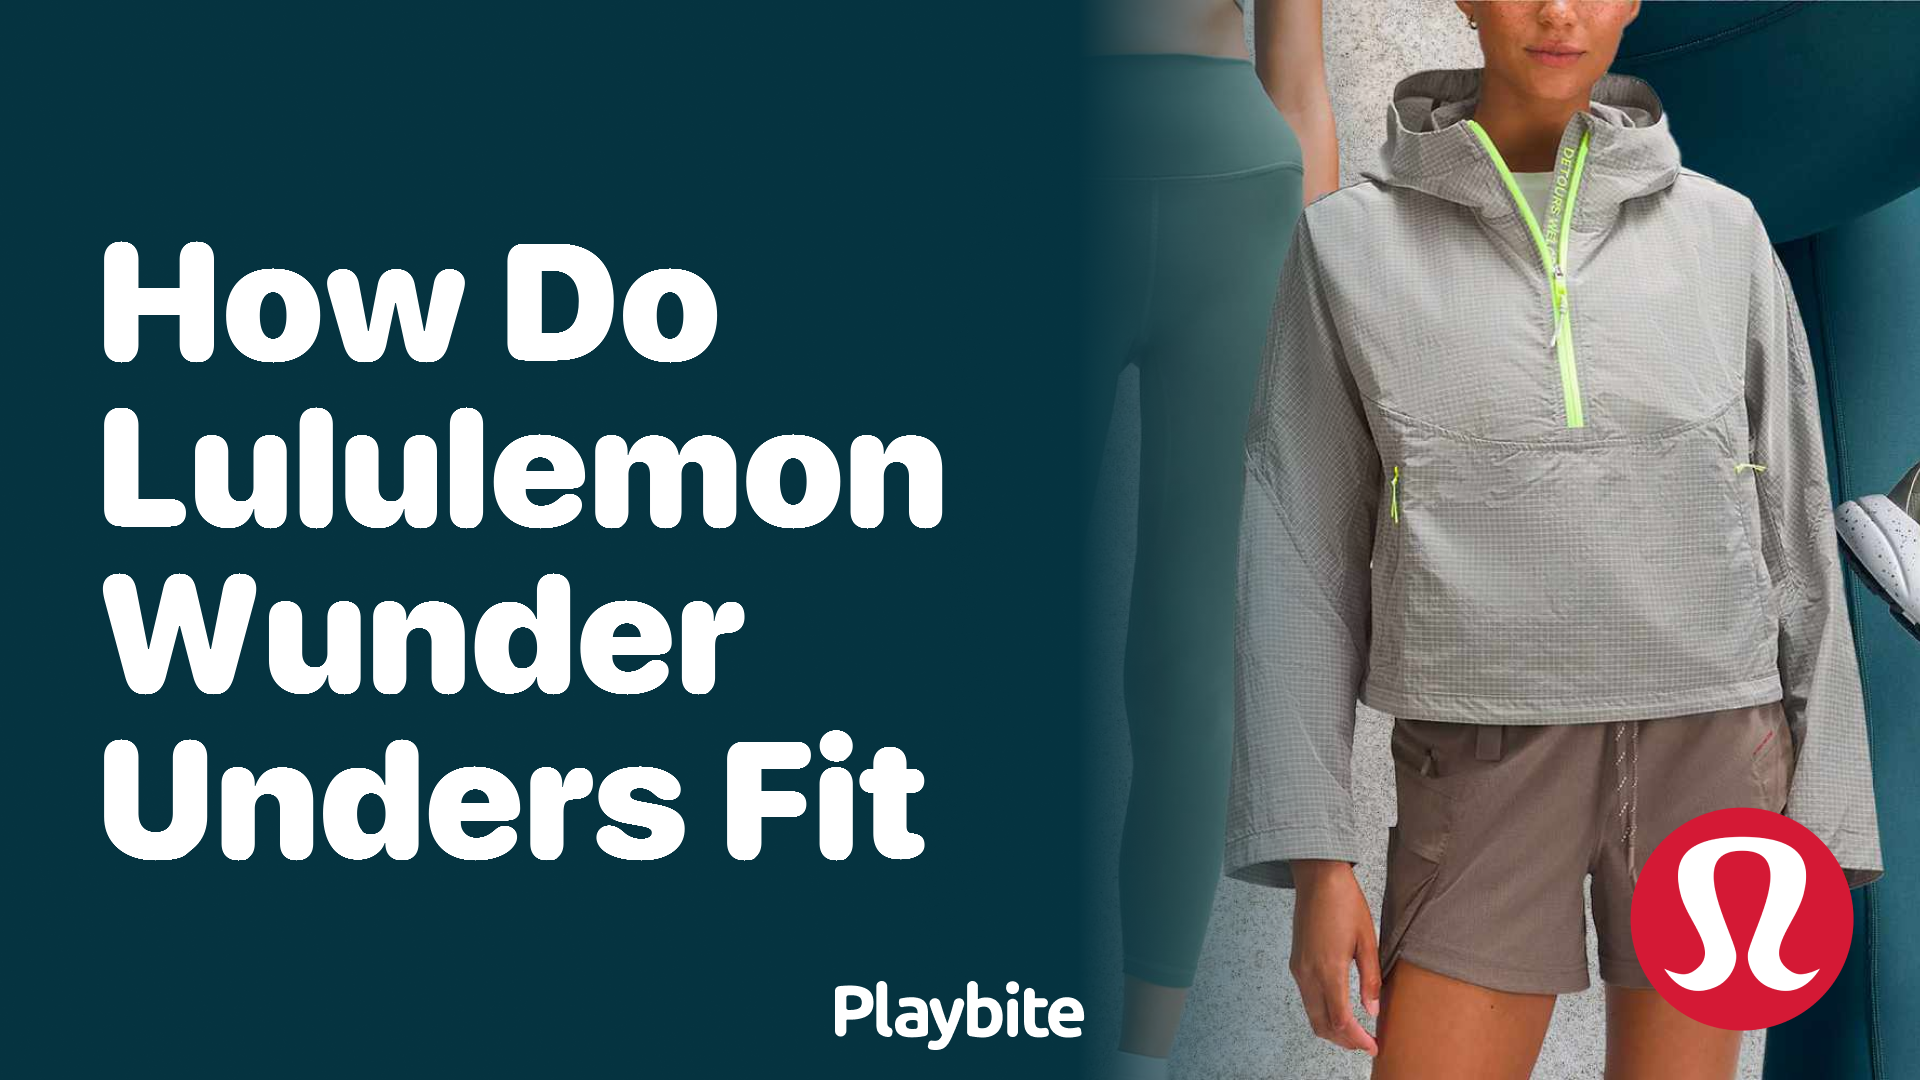 Do Lululemon Wunder Under Pants Run Small? - Playbite